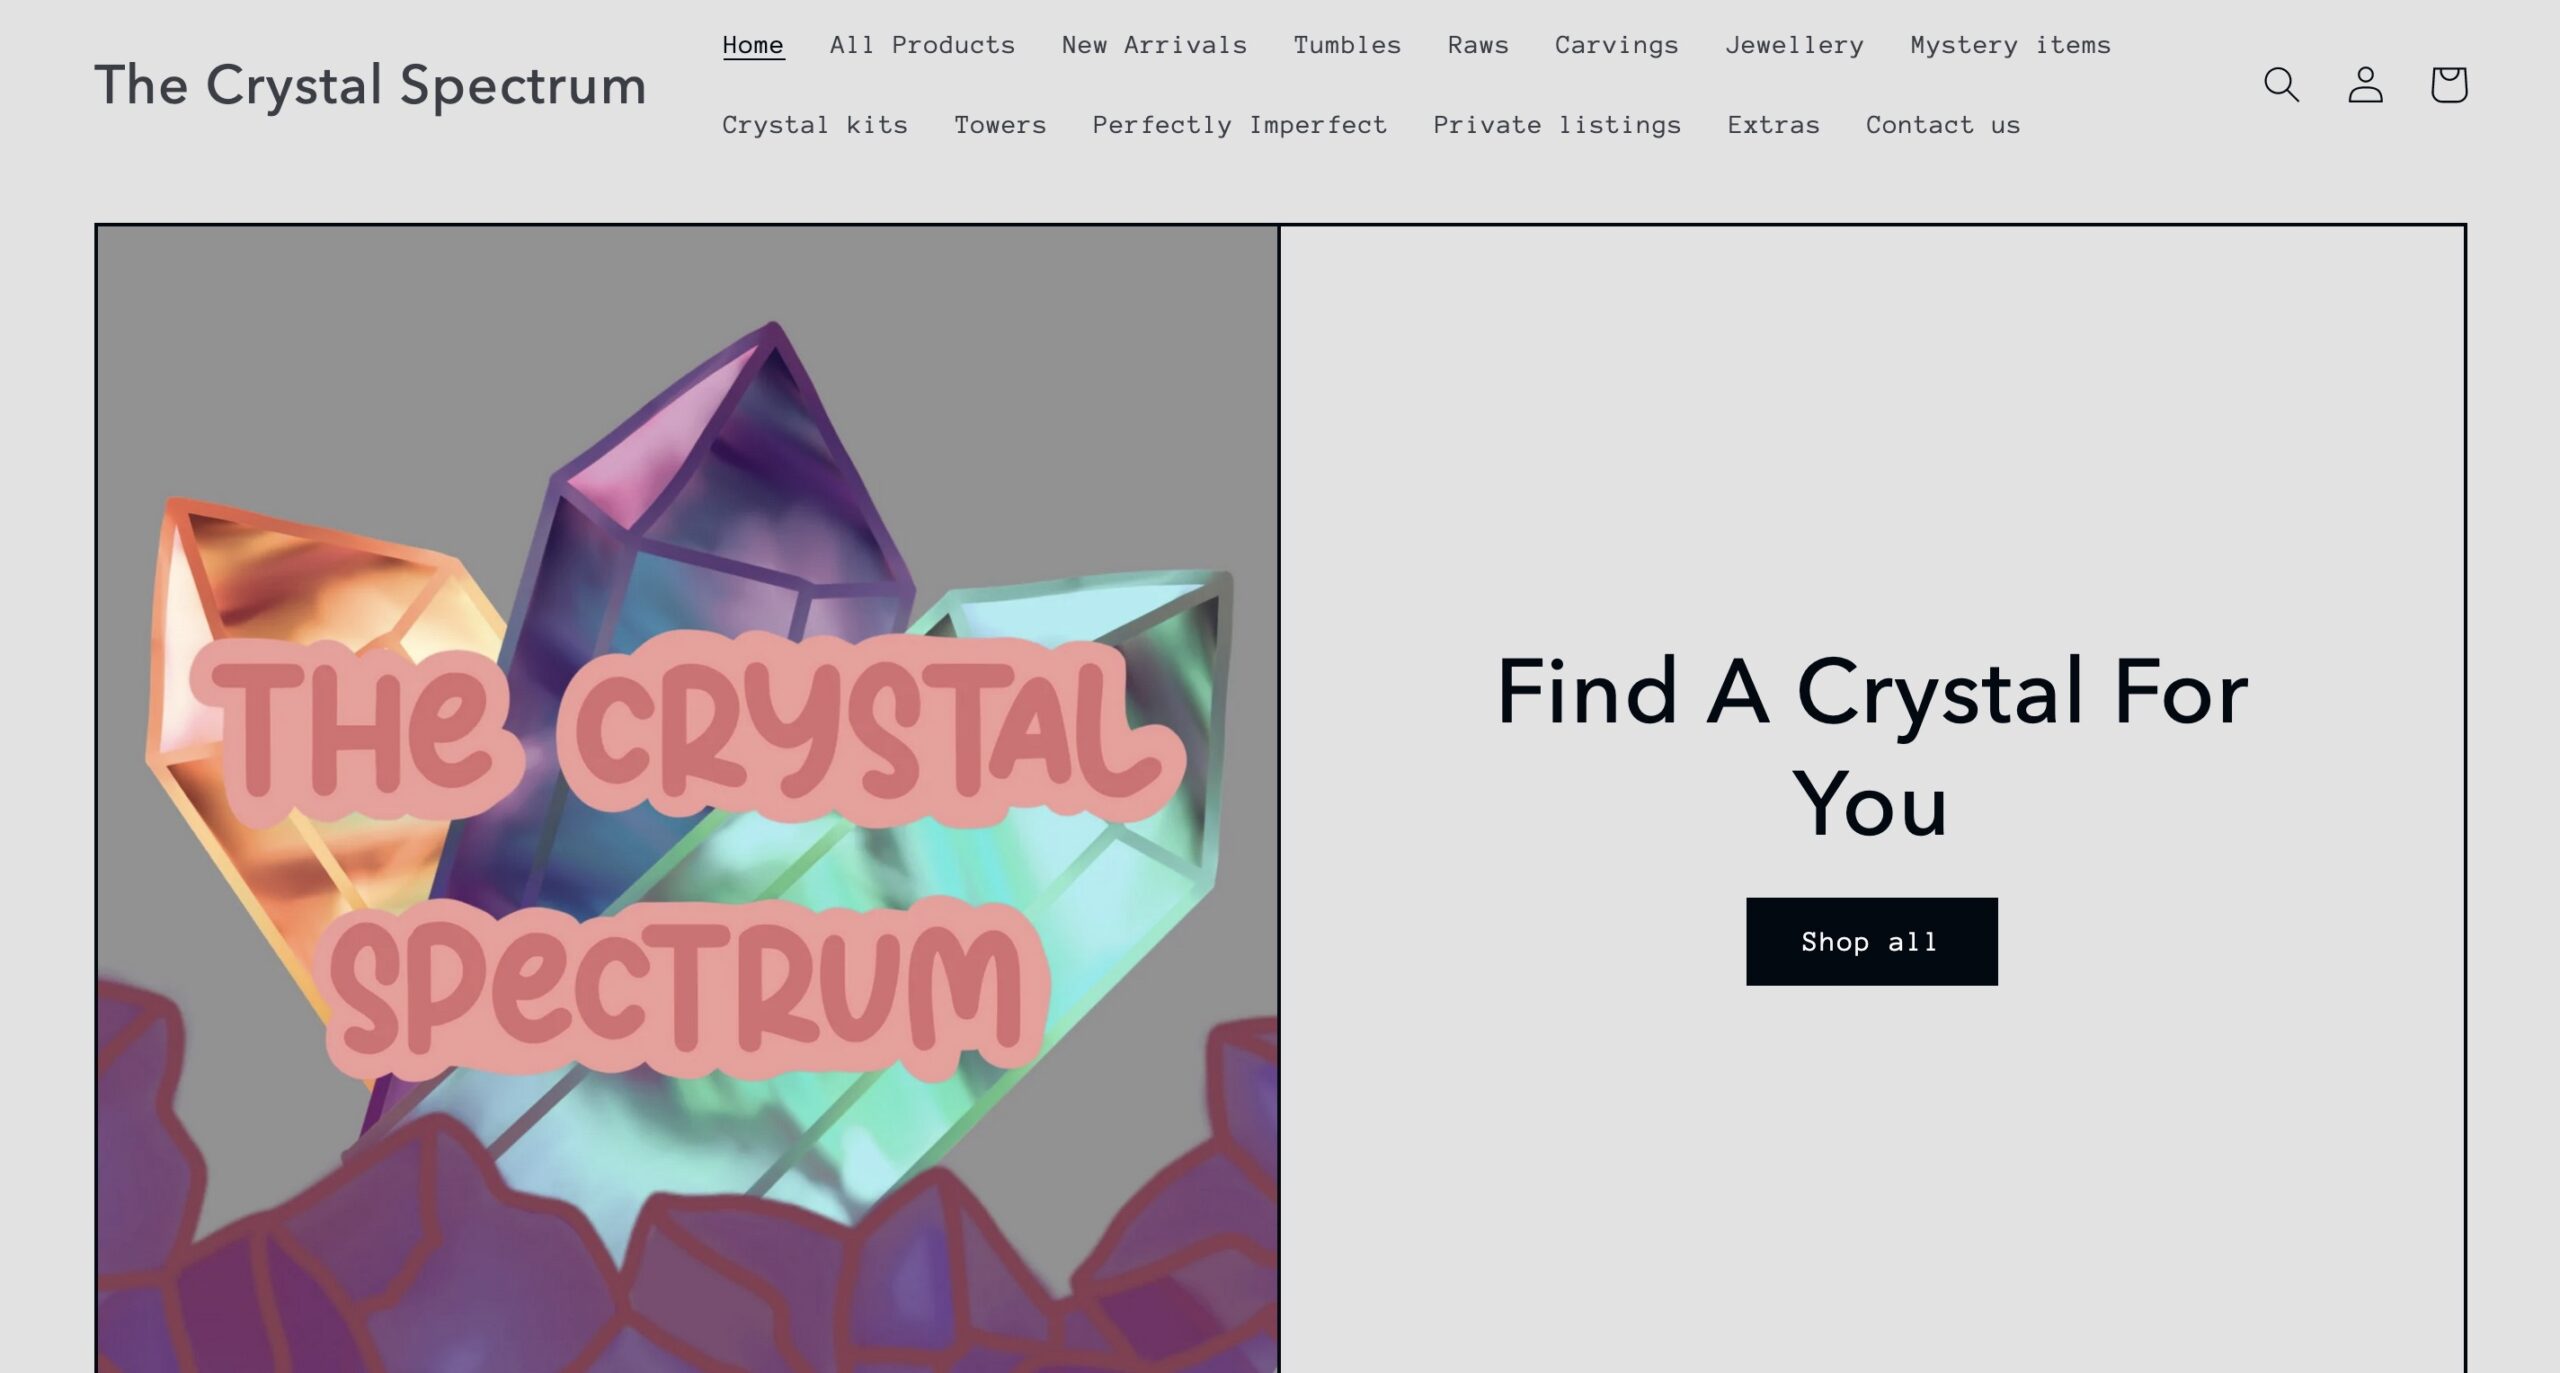 thecrystalspectrum.com